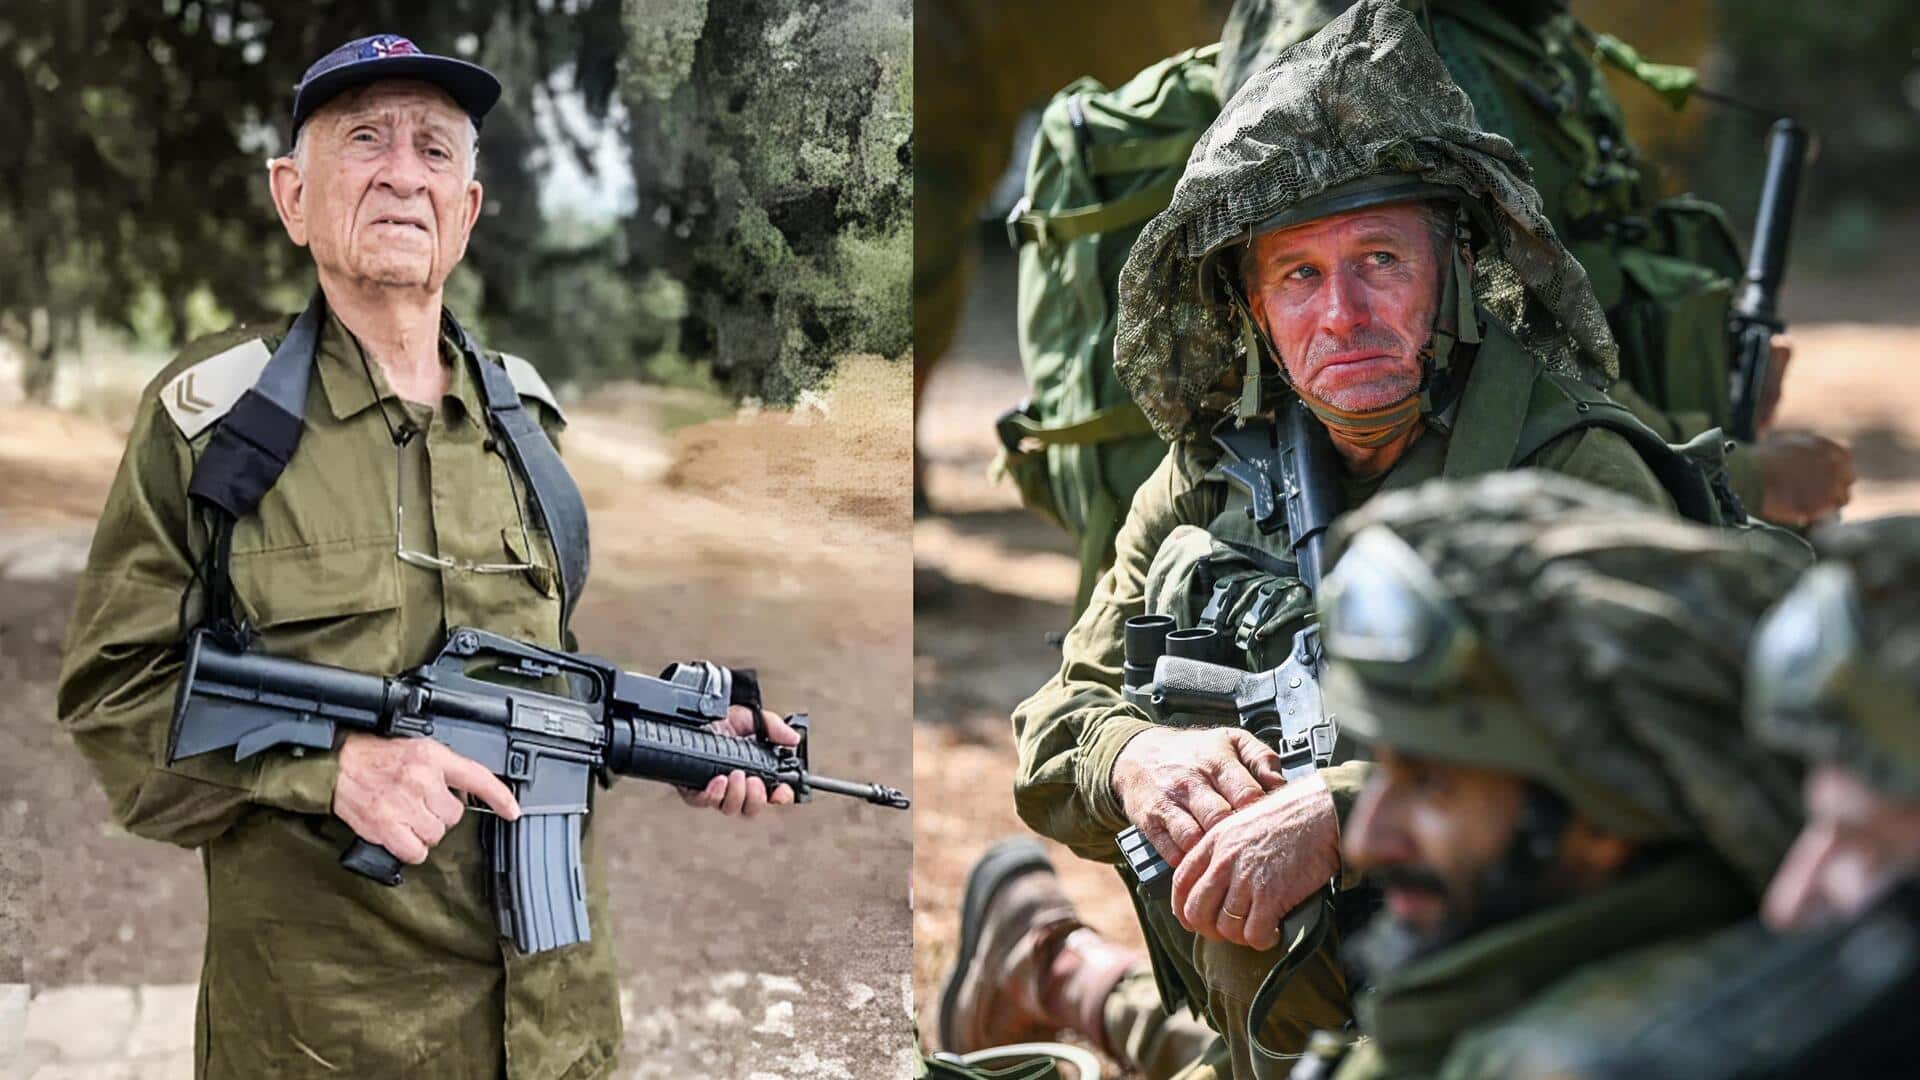 95-year-old Israeli veteran joins war against Hamas